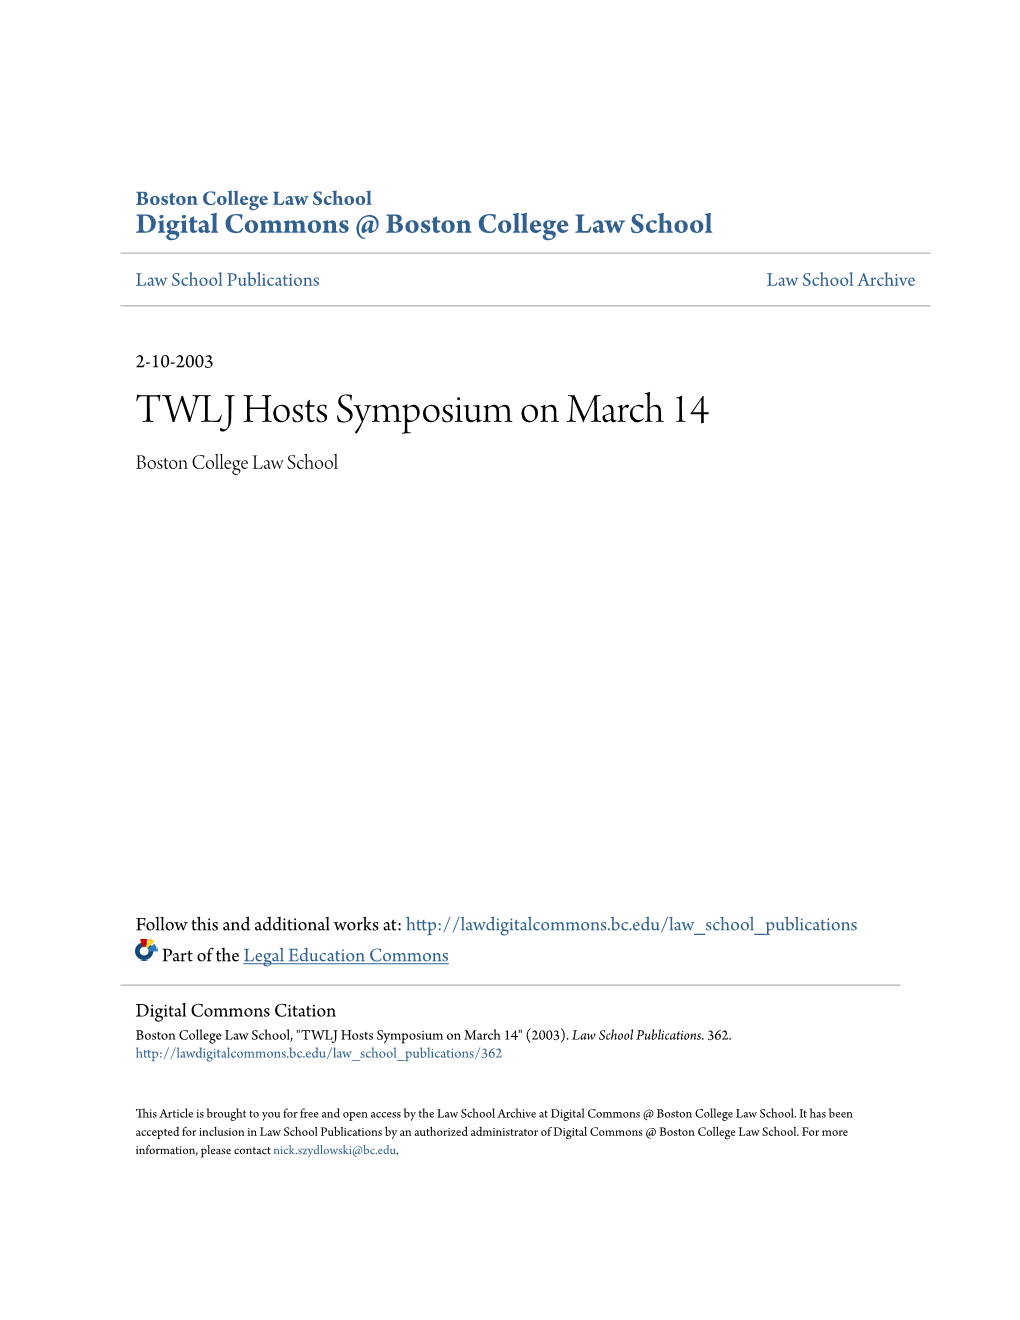 TWLJ Hosts Symposium on March 14 Boston College Law School